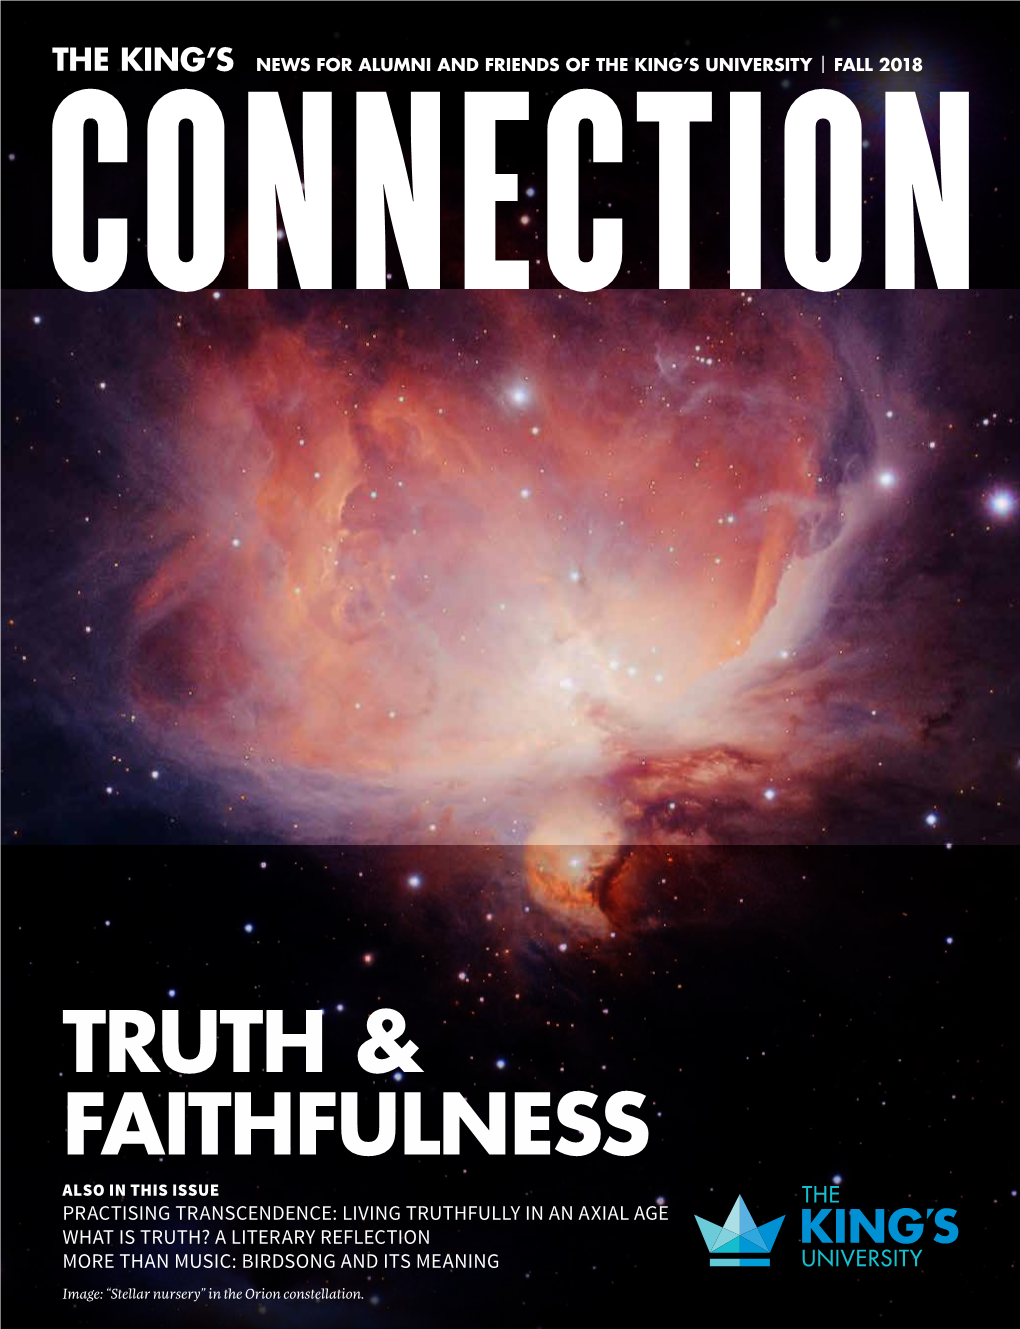 Truth & Faithfulness